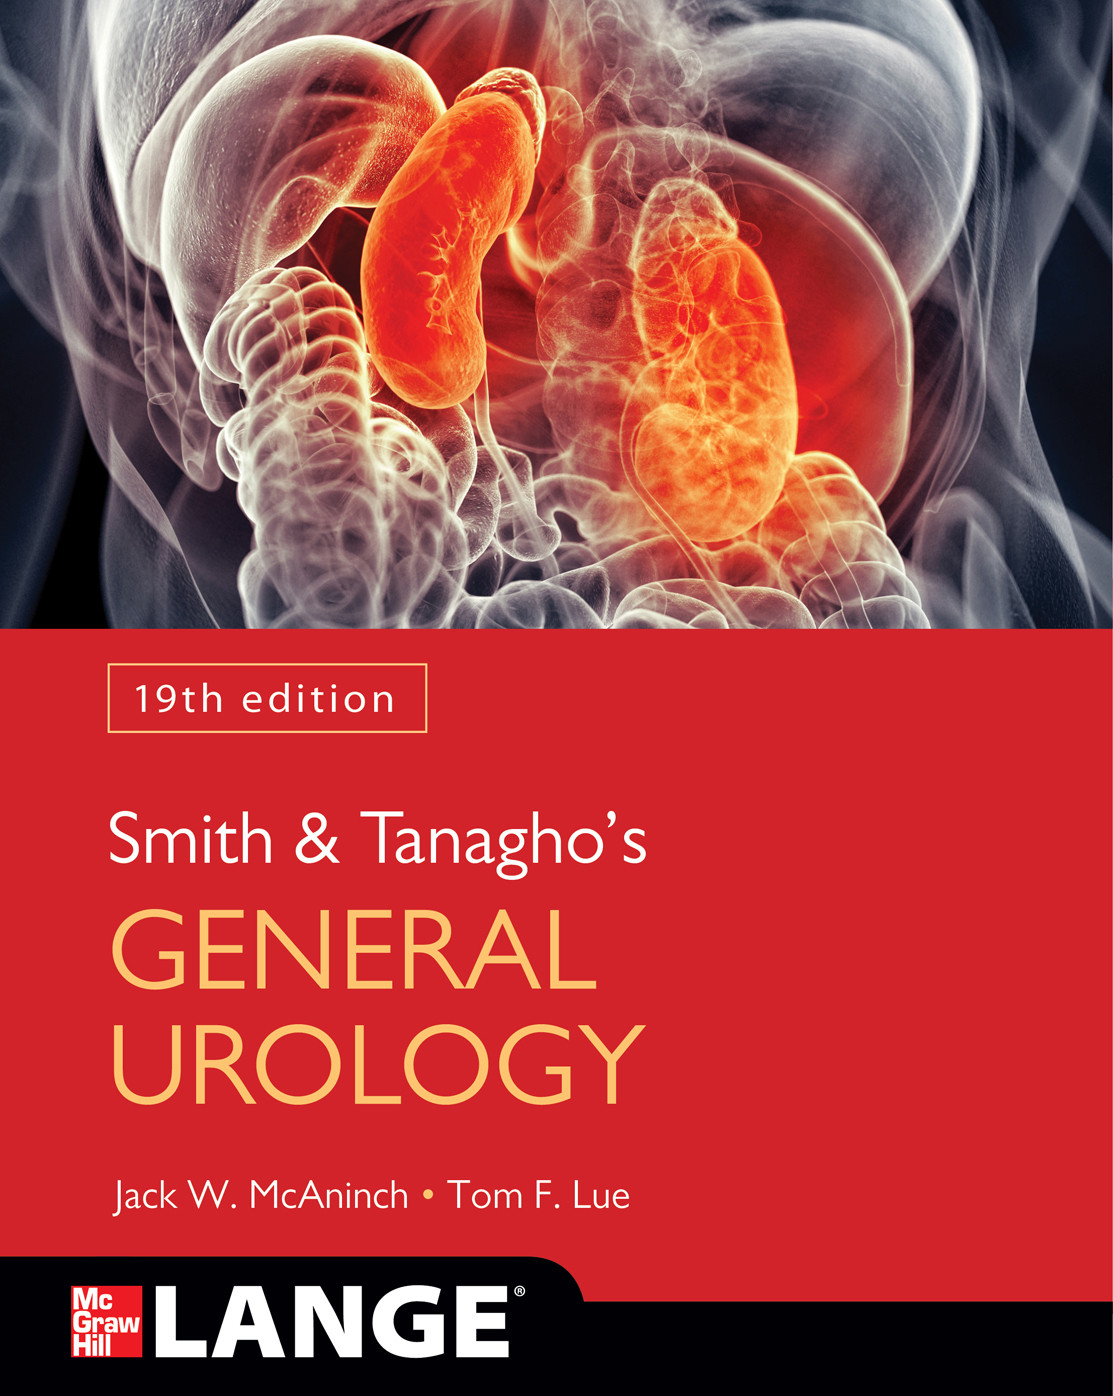 Smith & Tanagho's General Urology, 19th ed.